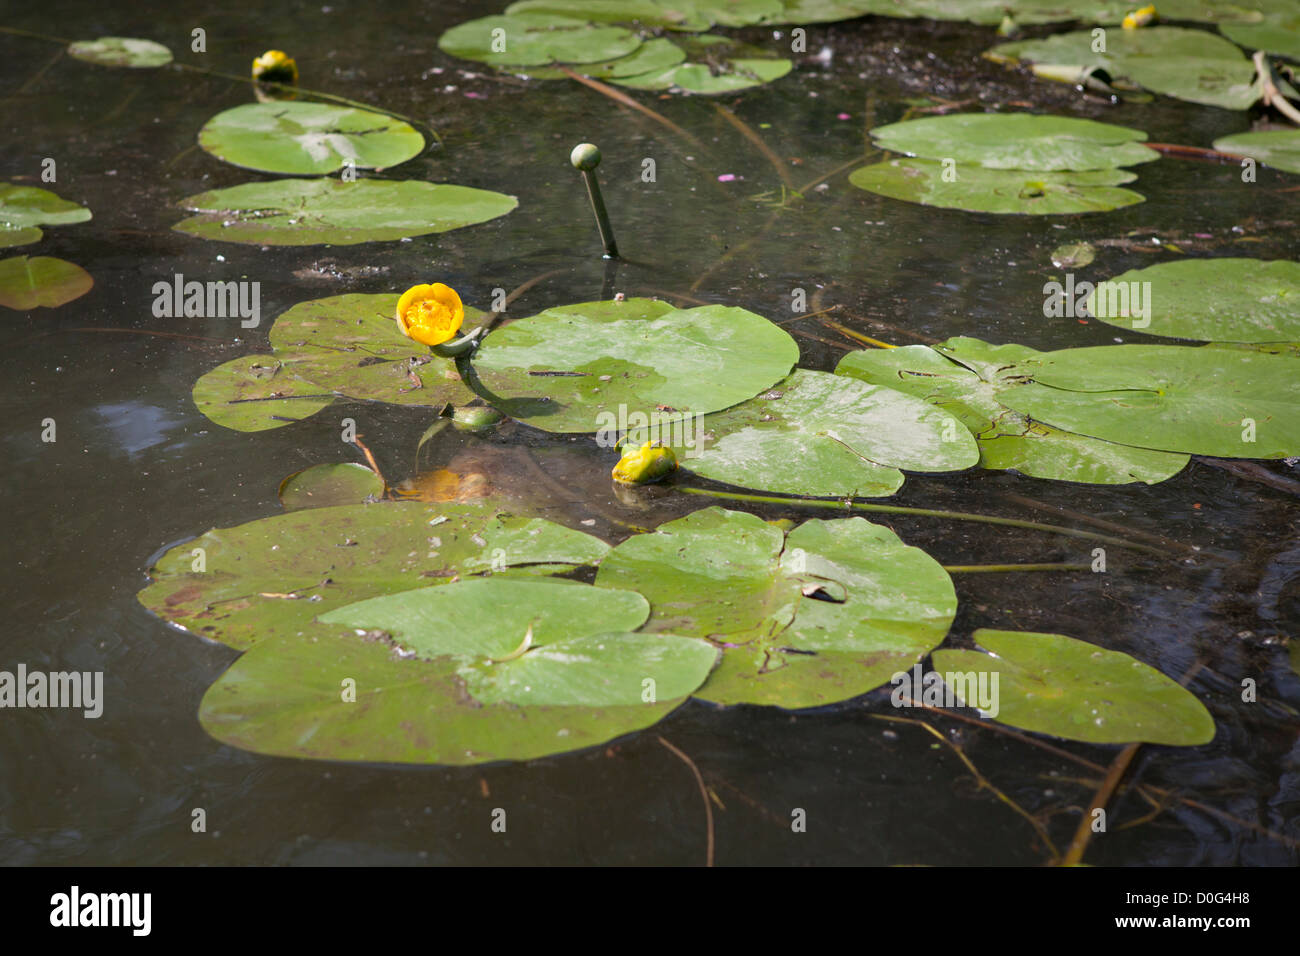 Water lilies close up at National Park 'de Biesbosch'  in the Netherlands Stock Photo